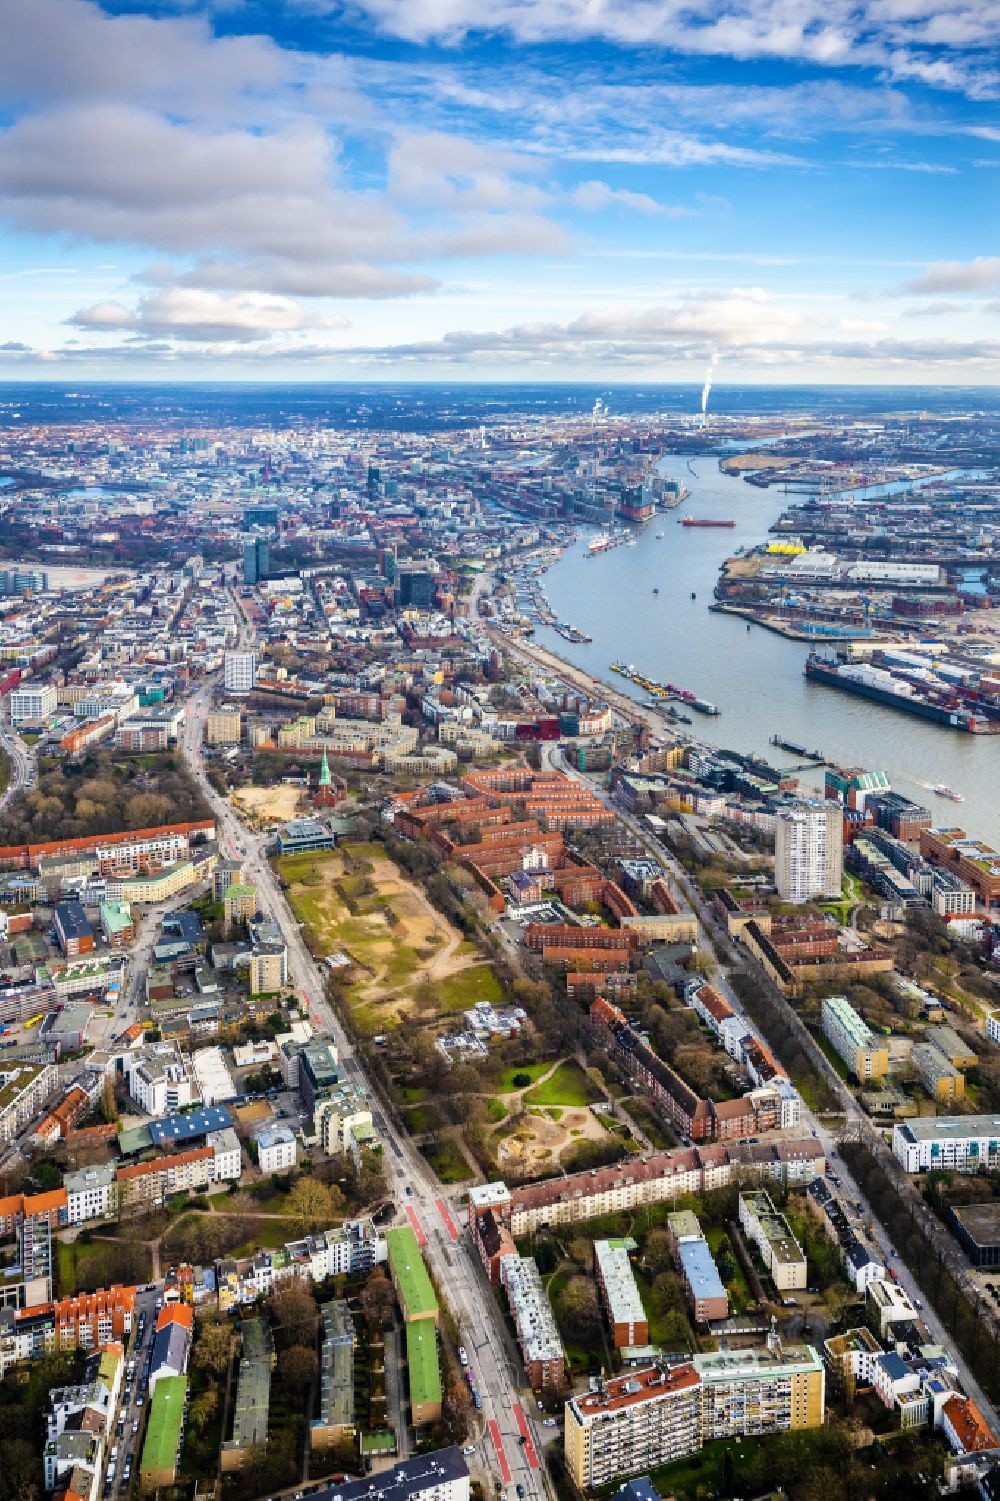 Hamburg from the bird's eye view: Cityscape of the district Altona in Hamburg, Germany